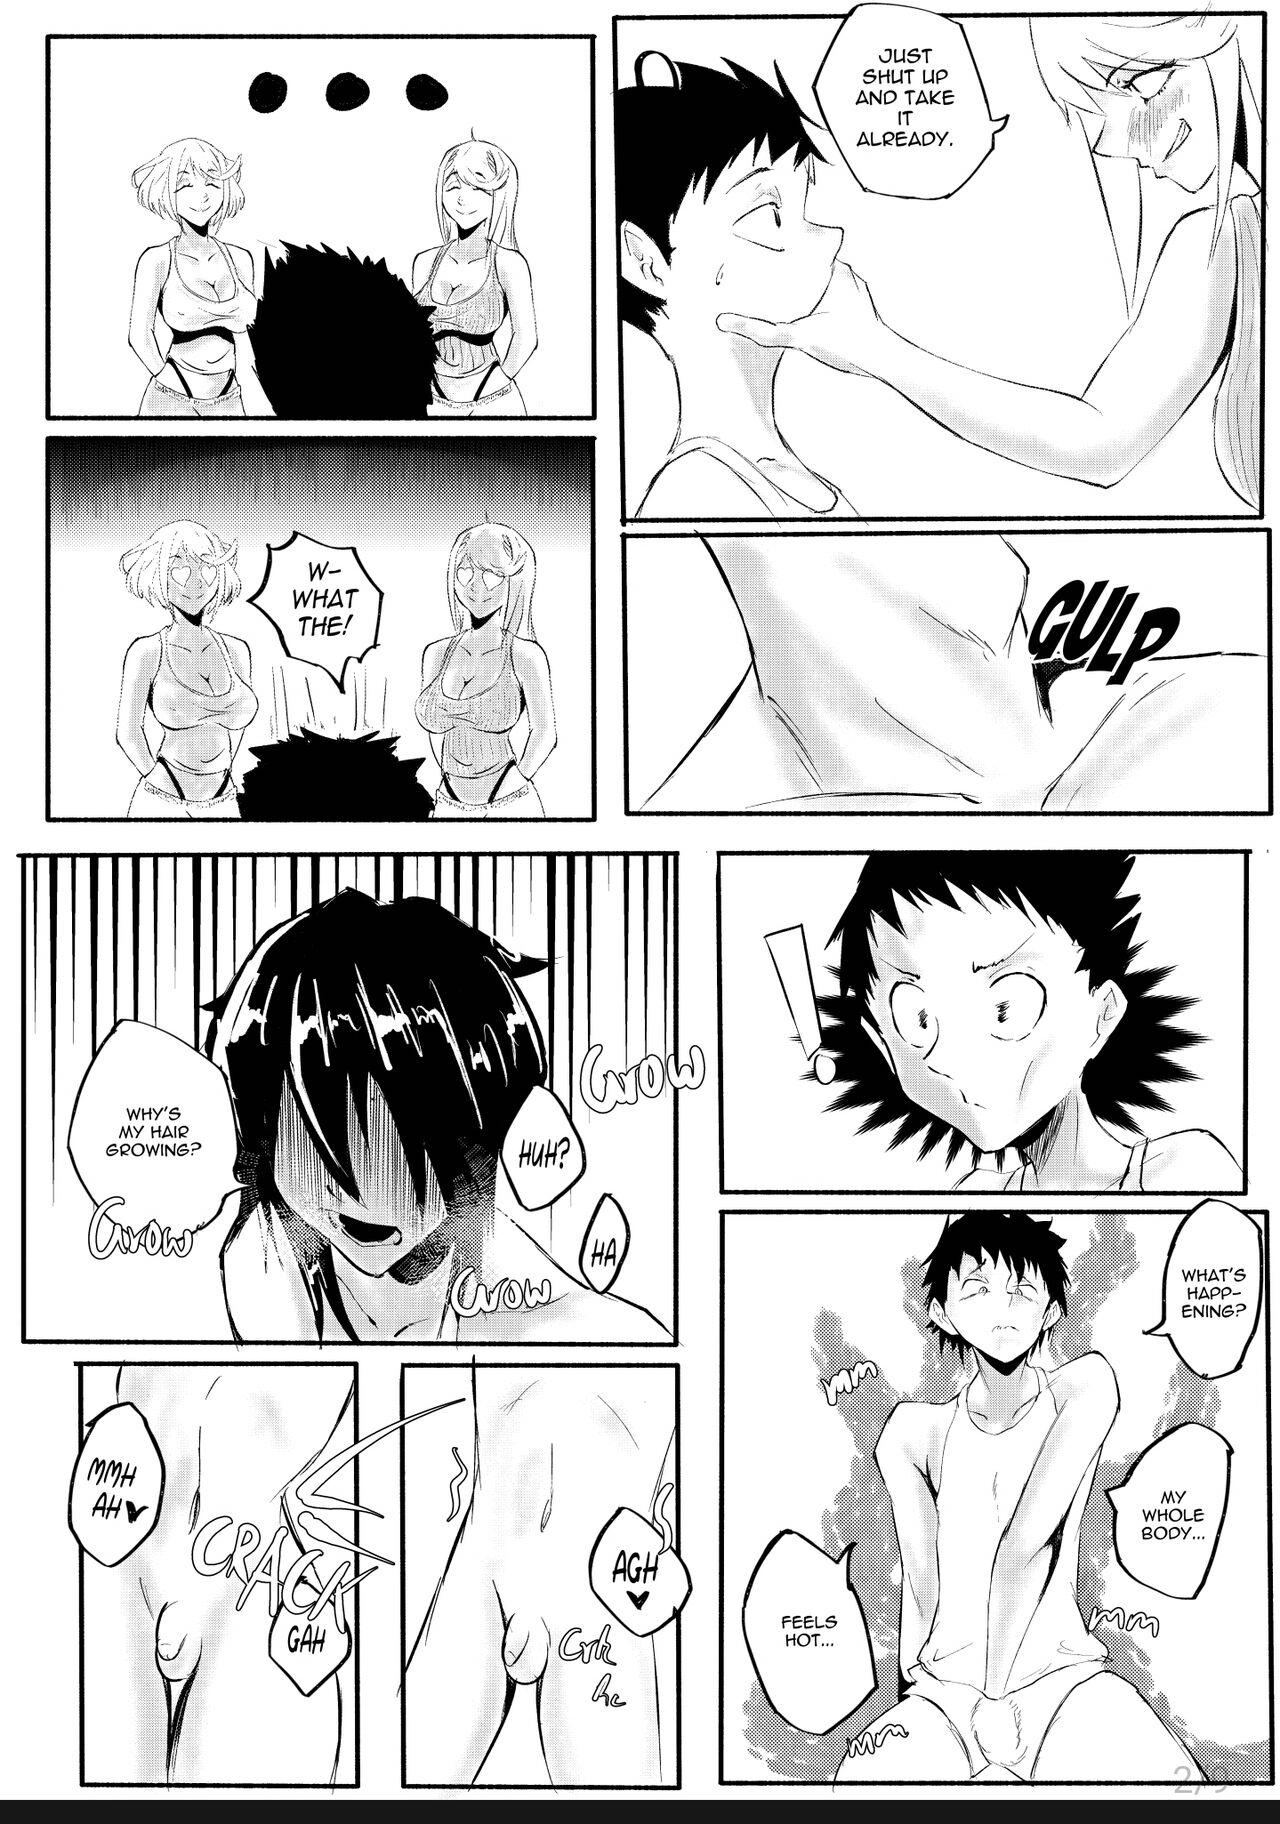 Bribe Xenoblade 2 gender transformation Manga Peeing - Picture 2